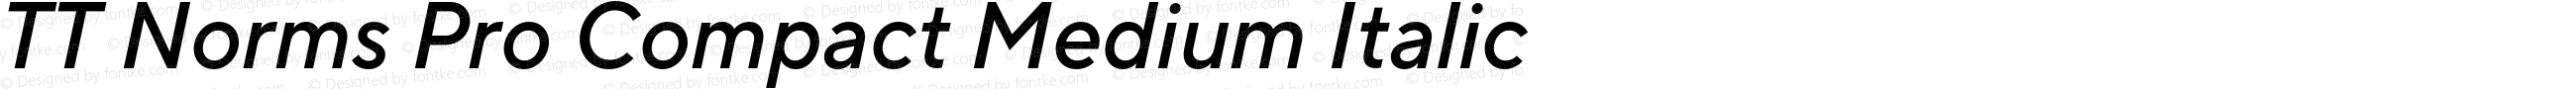 TT Norms Pro Compact Medium Italic